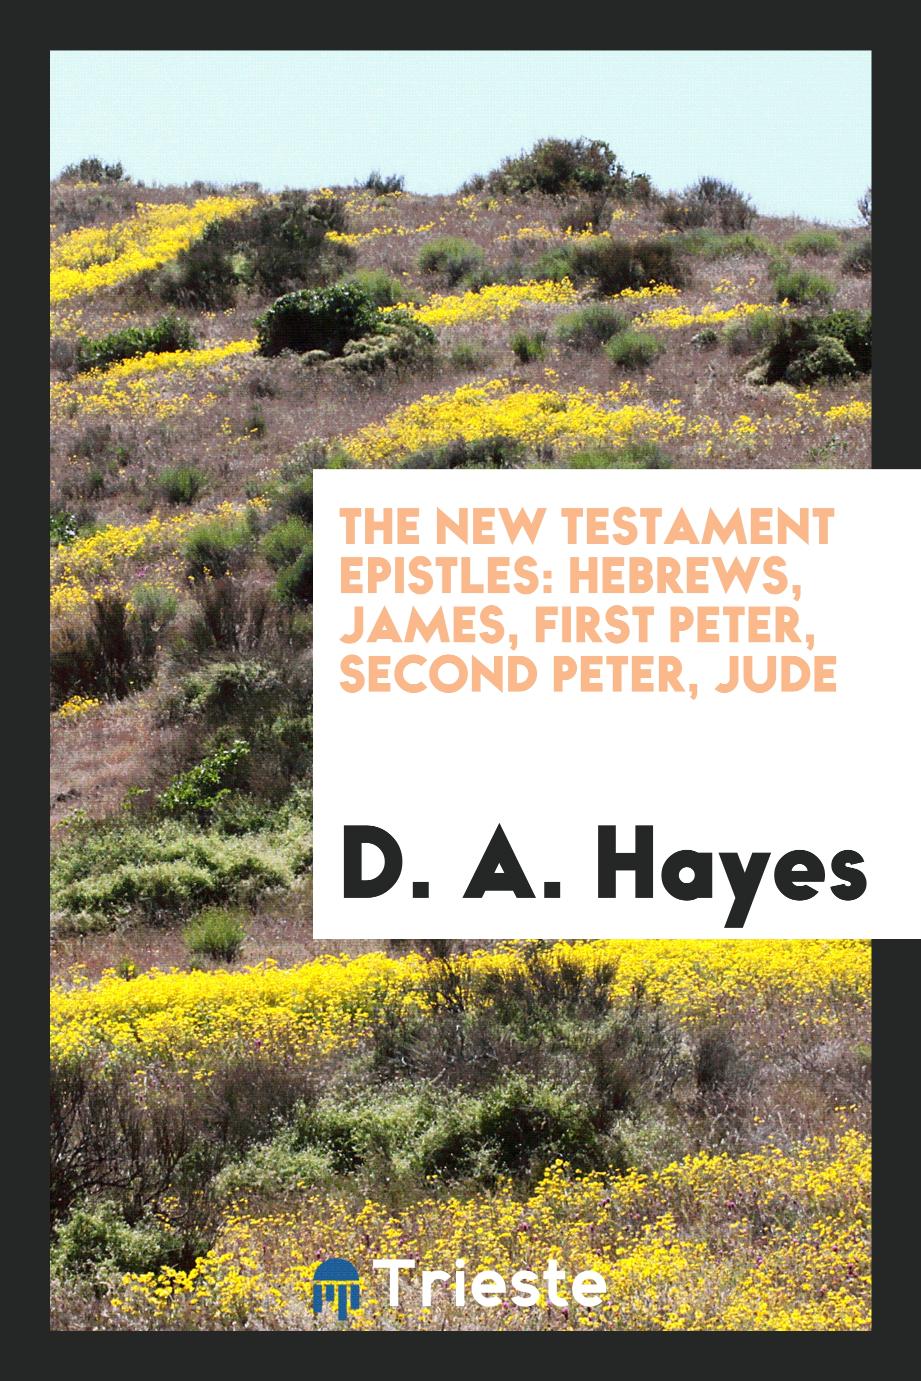 The New Testament epistles: Hebrews, James, First Peter, Second Peter, Jude